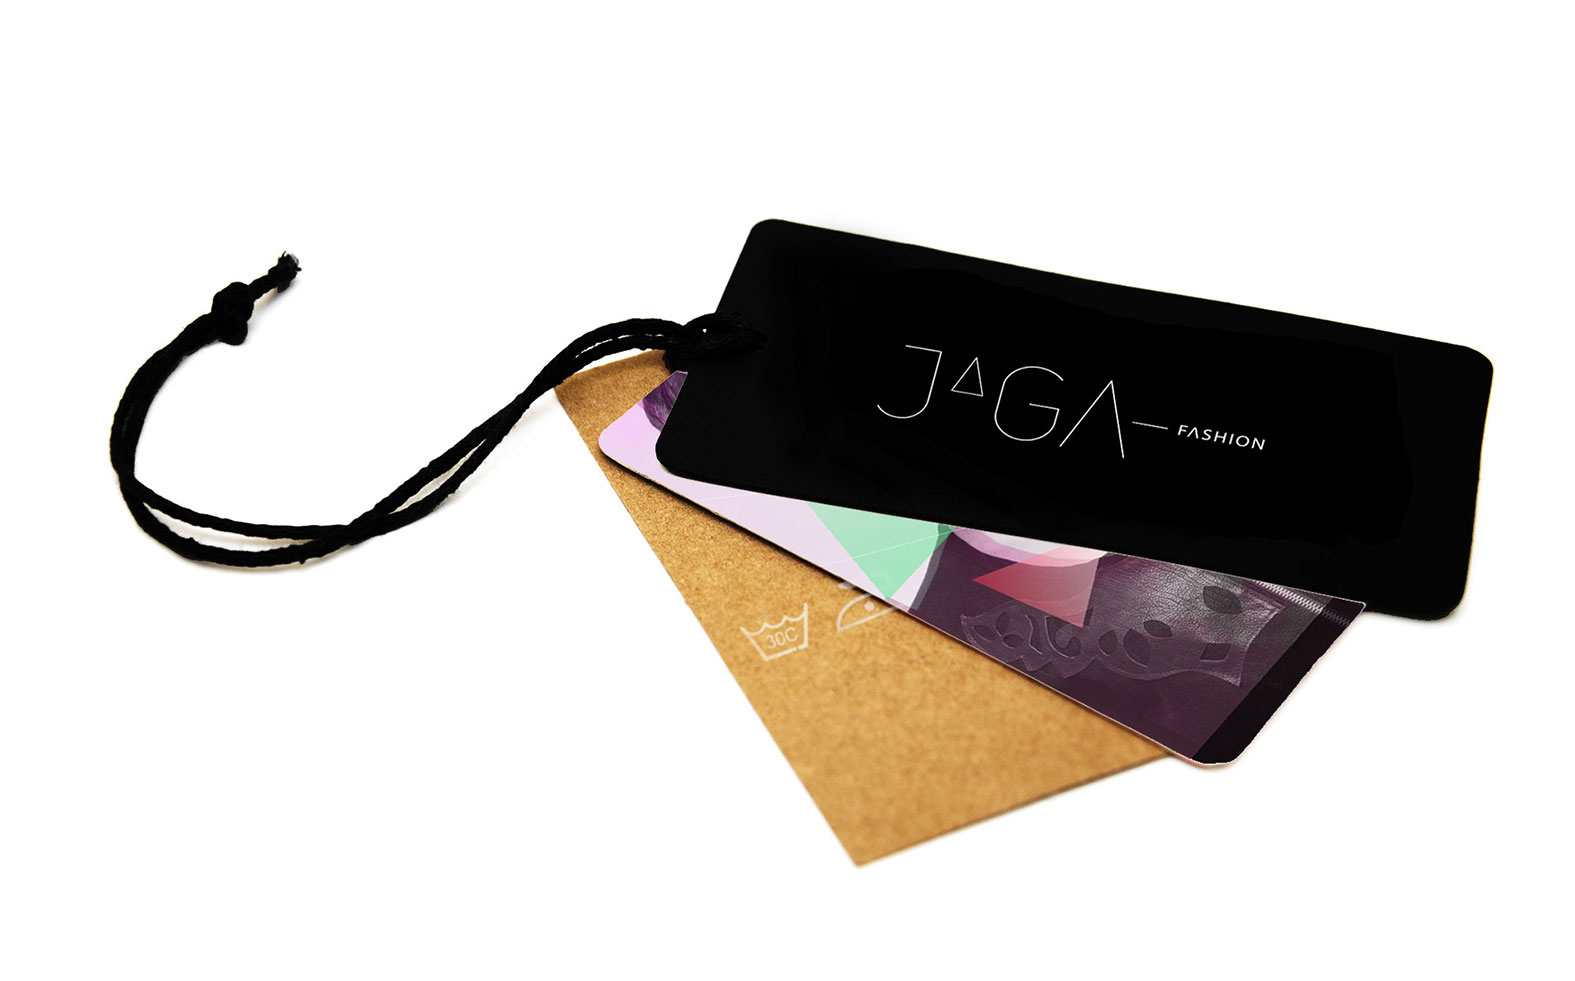 Metka ubraniowa z logo Jaga Fashion